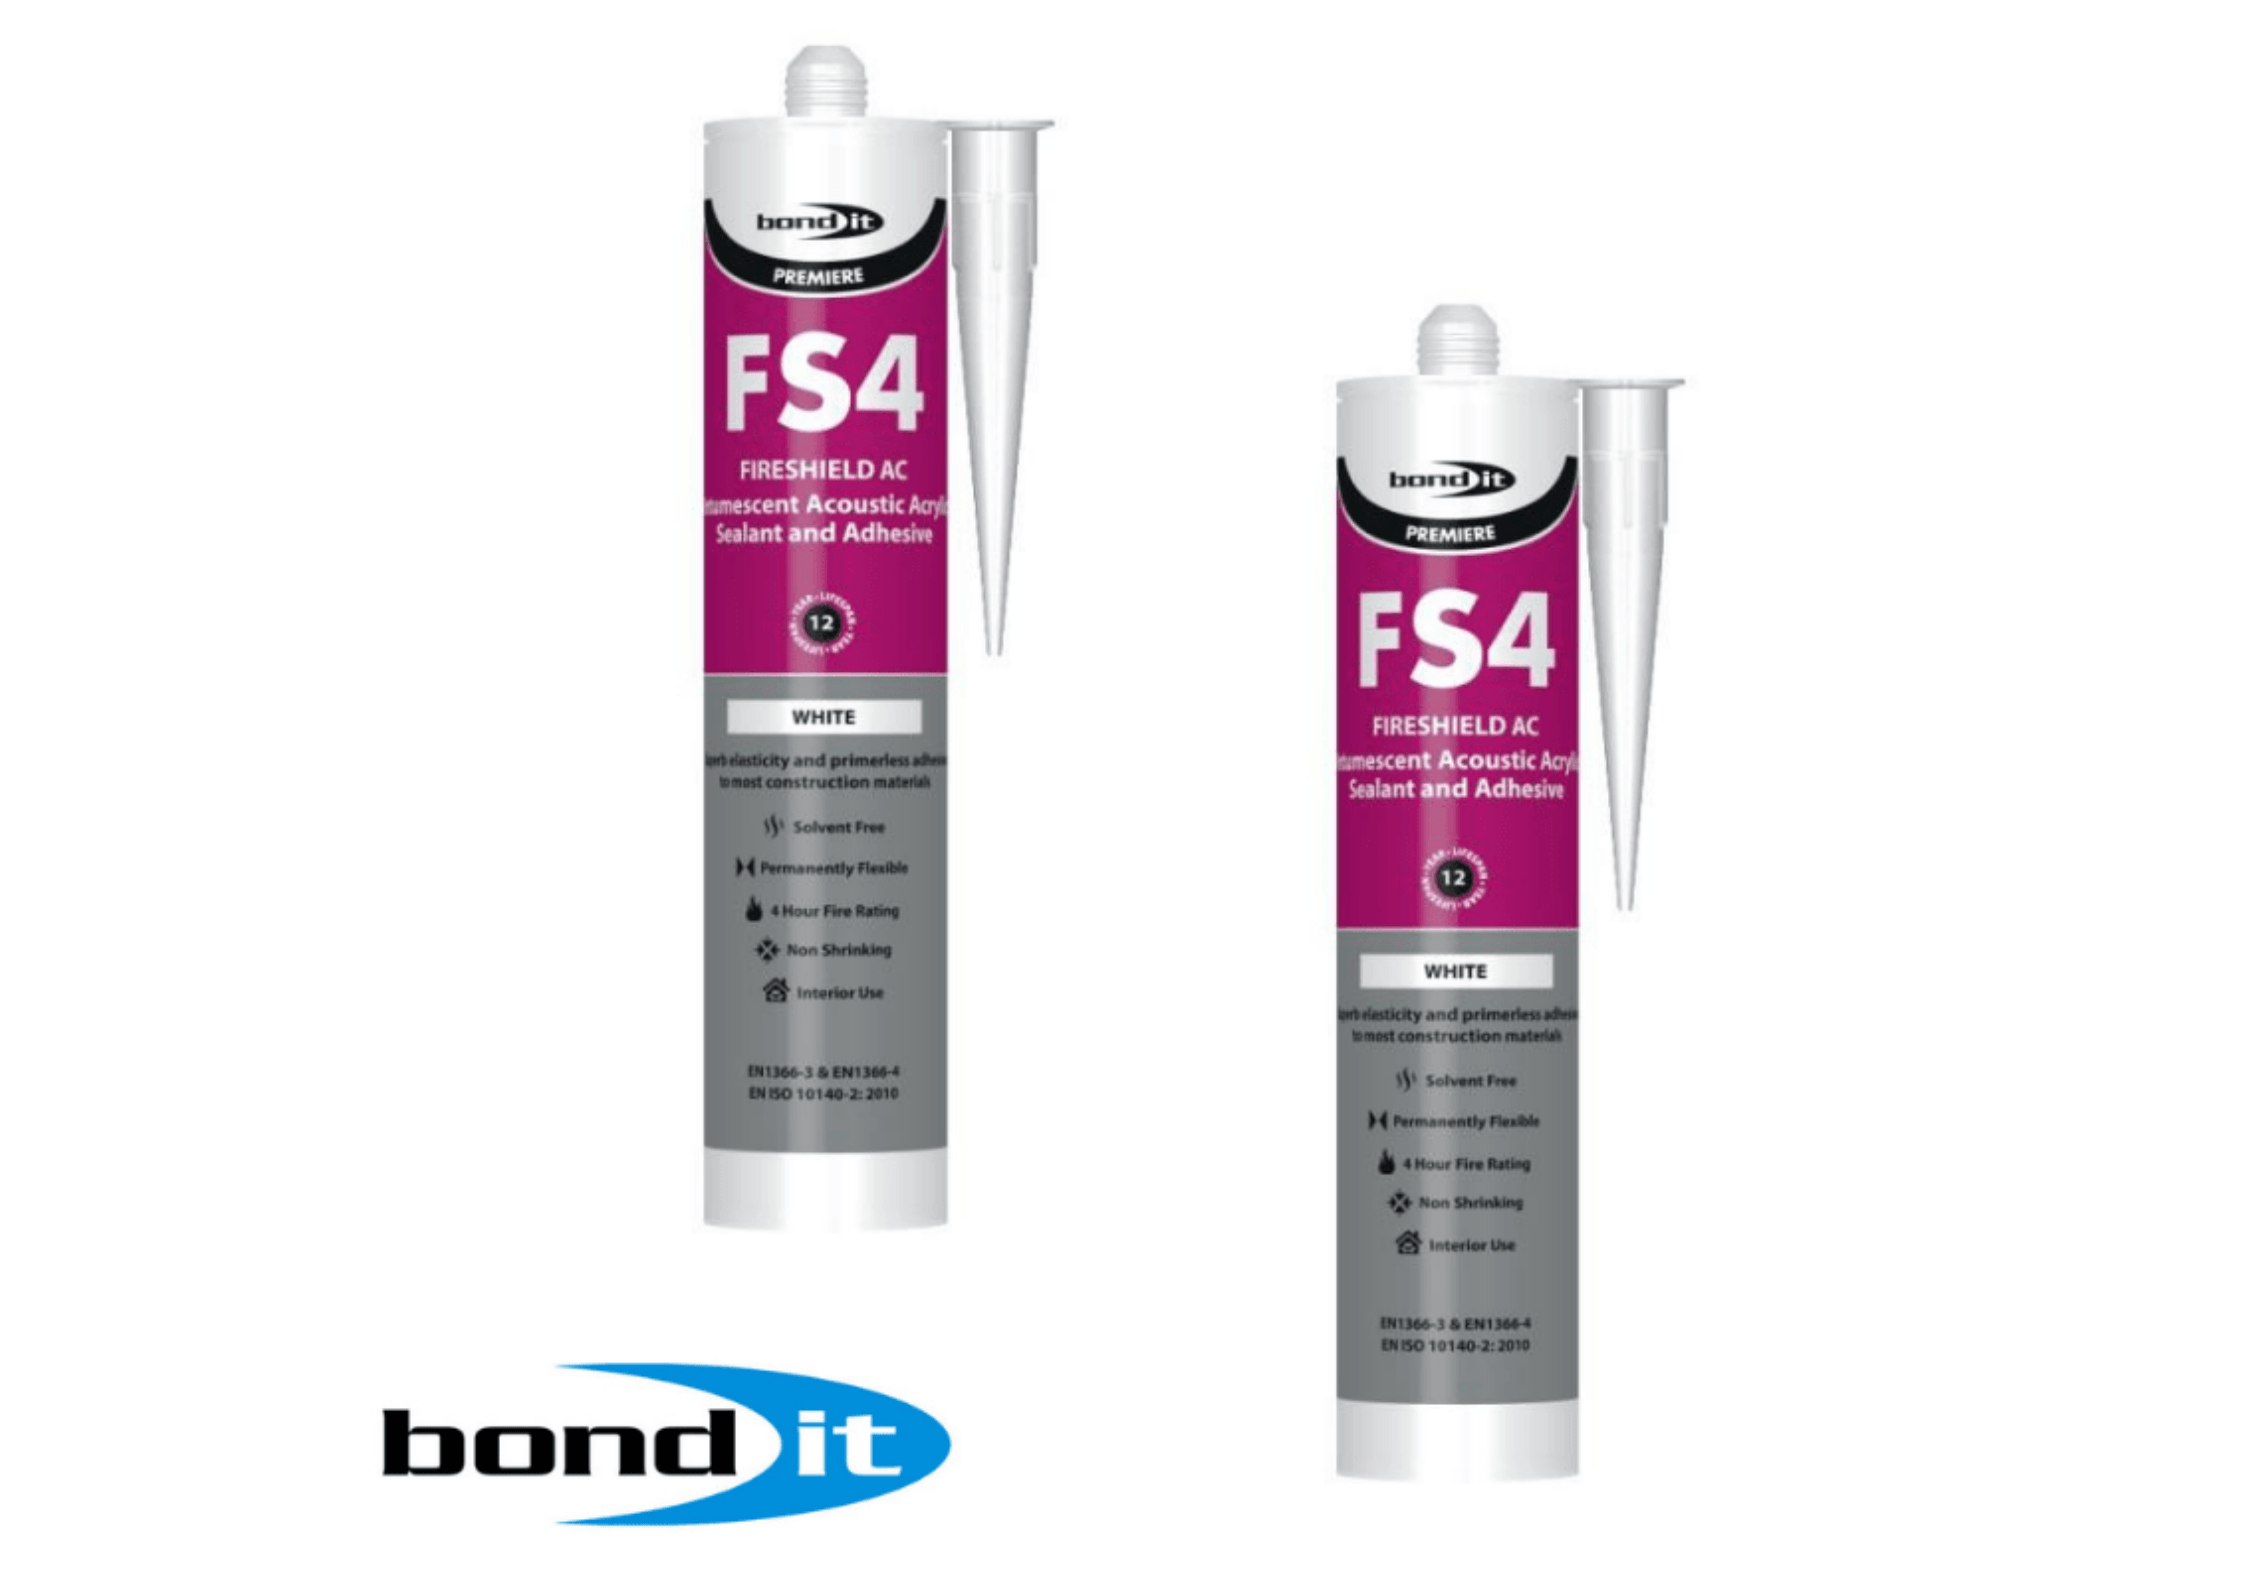 Bond It Building Consumables Single Tube FS4 Fireshield Intumescent Acoustic Sealant White 310ml 5060021360212 IUK01184 FS4 Acoustic Sealant White 310ml 